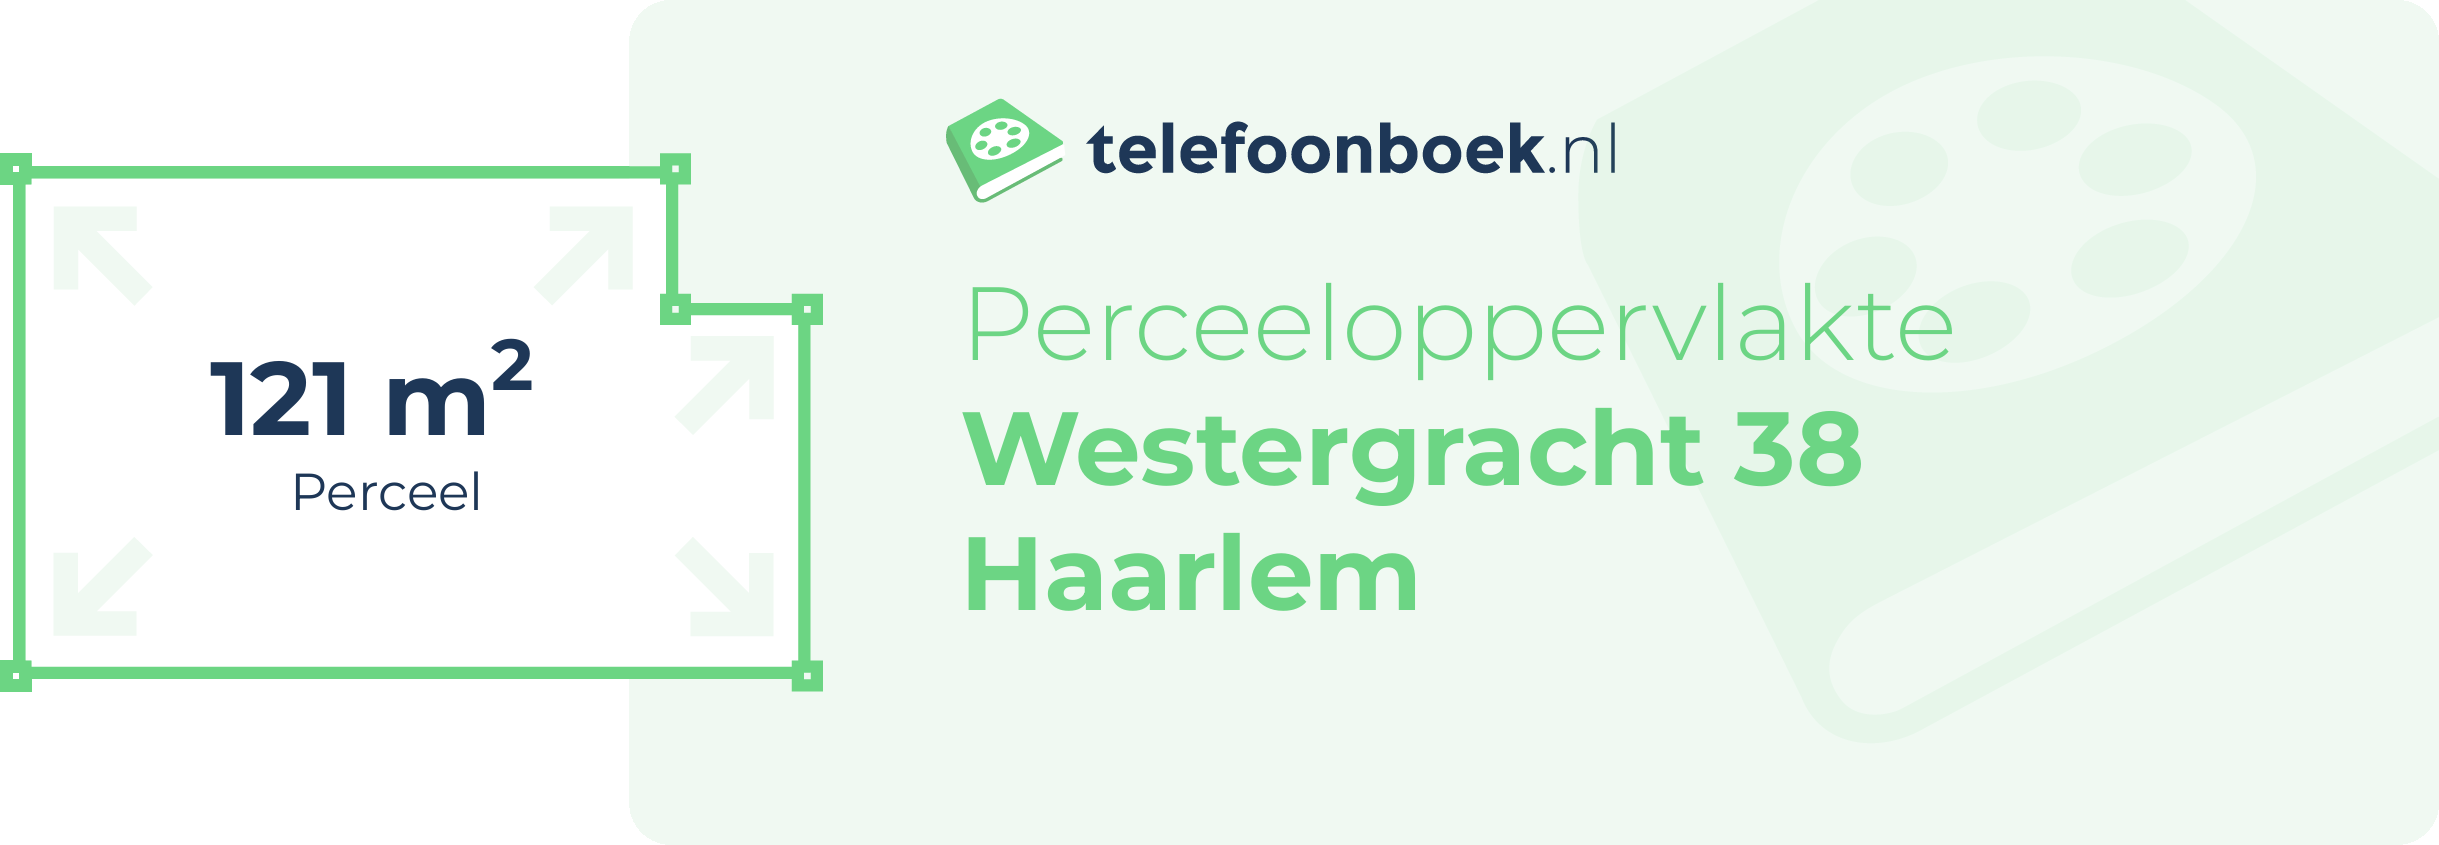 Perceeloppervlakte Westergracht 38 Haarlem